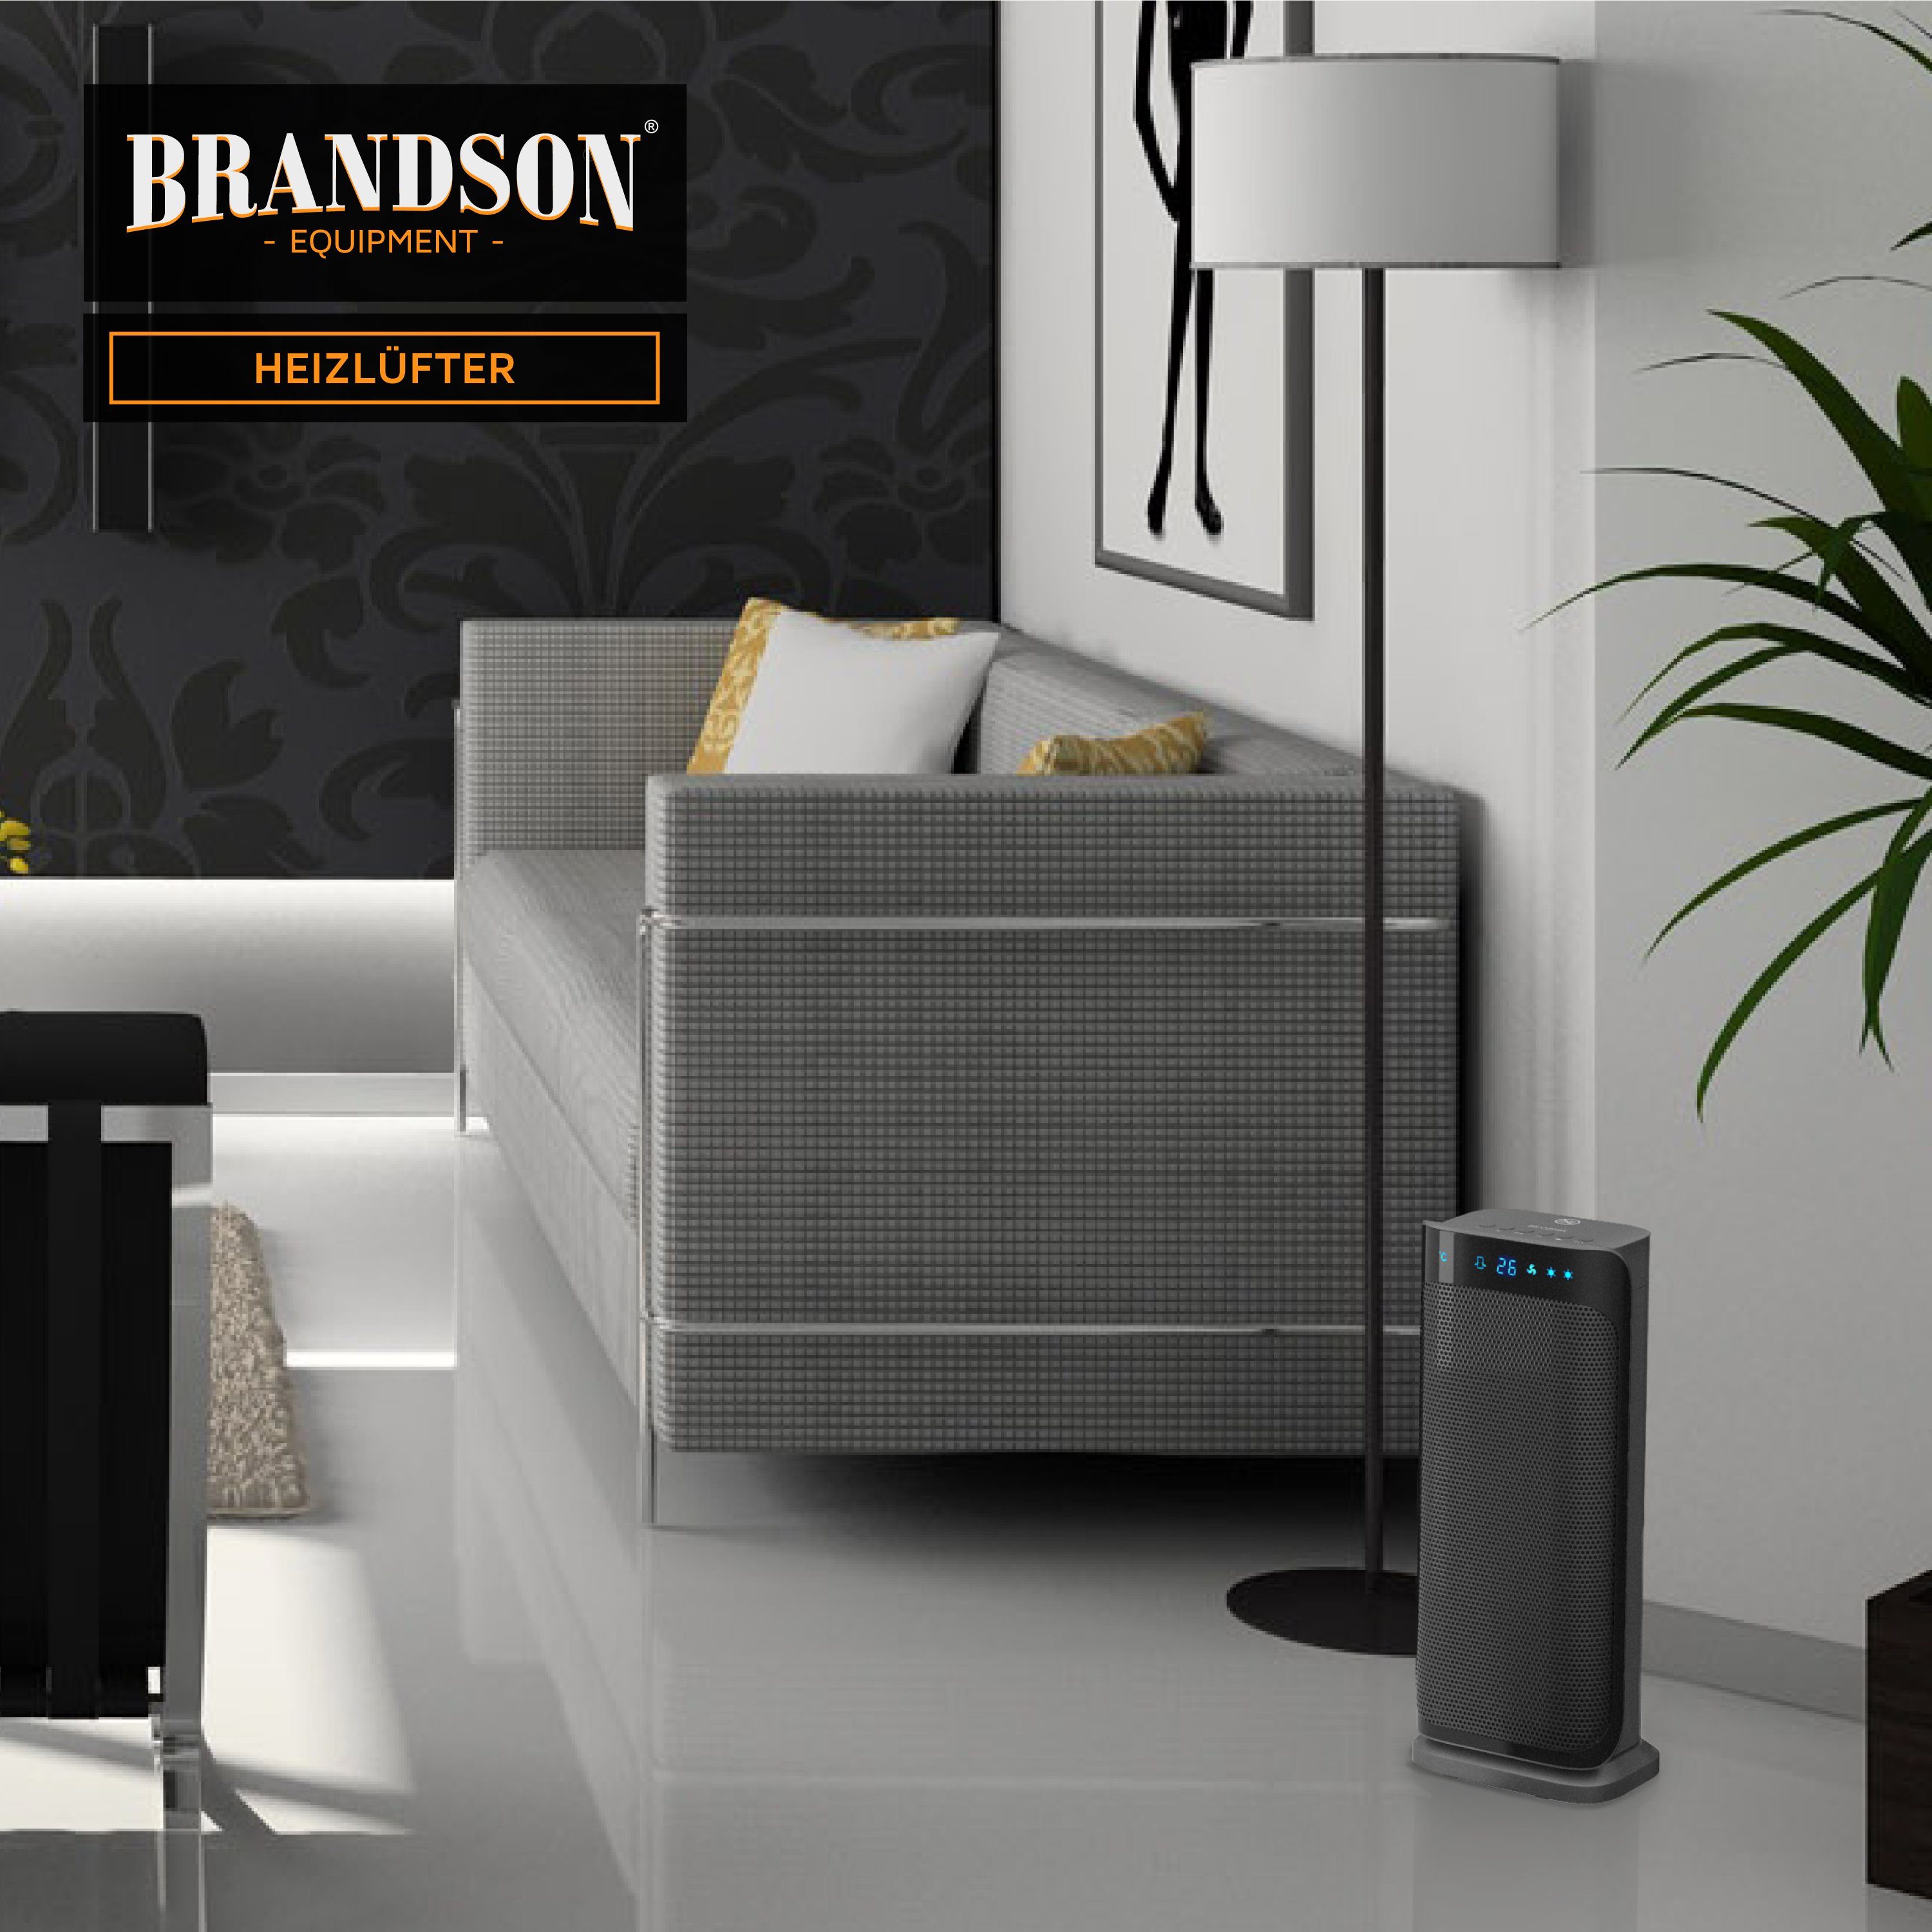 Brandson / W, Timer, Badezimmer grau 2000 Heizlüfter, schwarz Keramikheizlüfter leise, Oszillation, Fernbedienung,